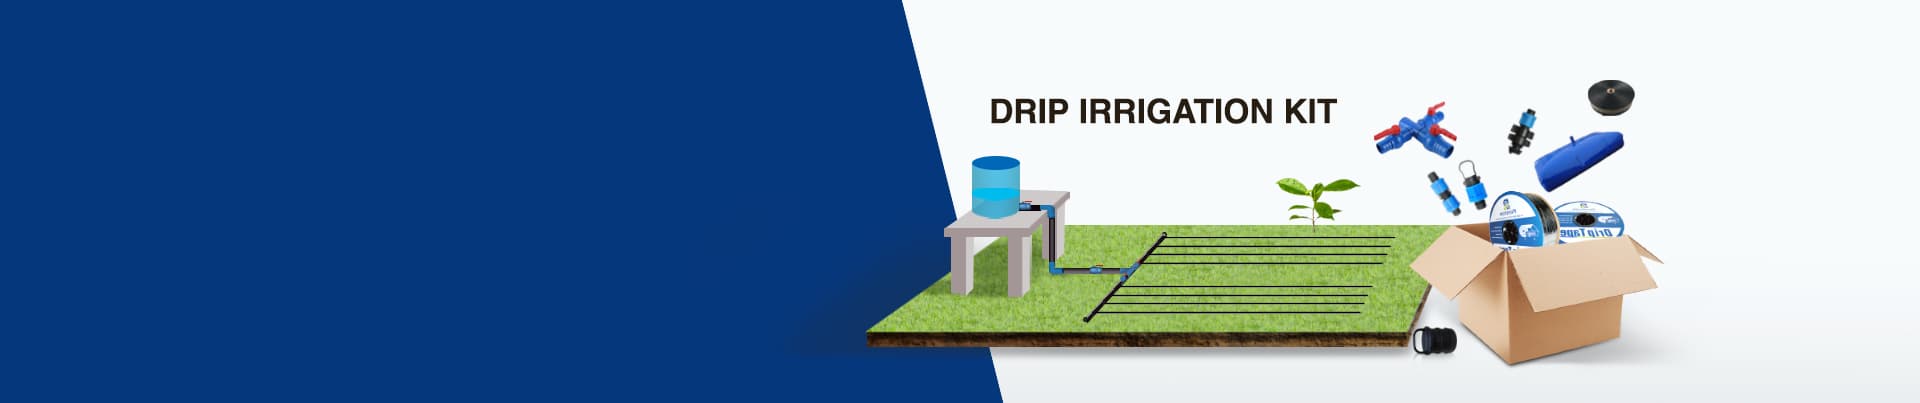 Drip irrigation system page BG-img